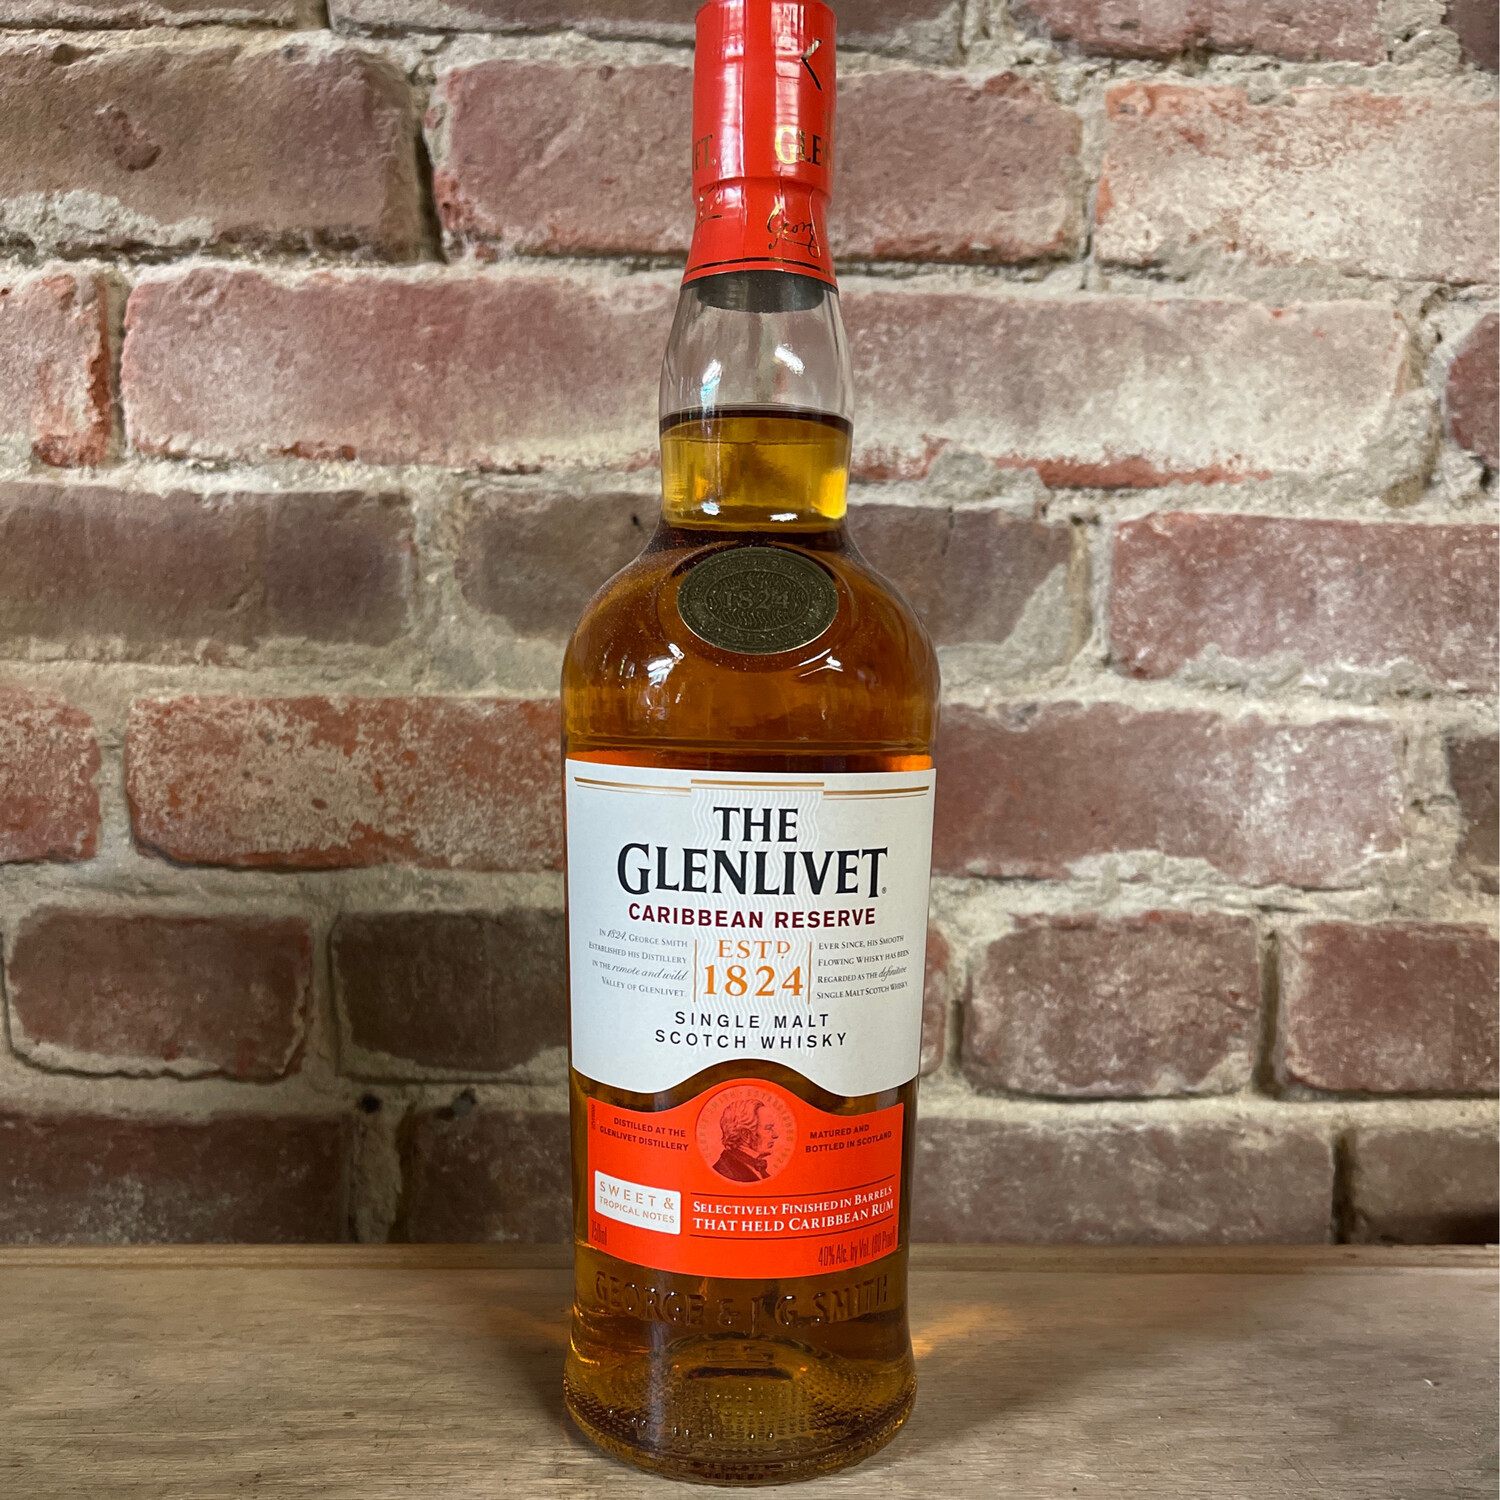 Glenlevit Single Malt Scotch Whisky Caribbean Cask 750ml